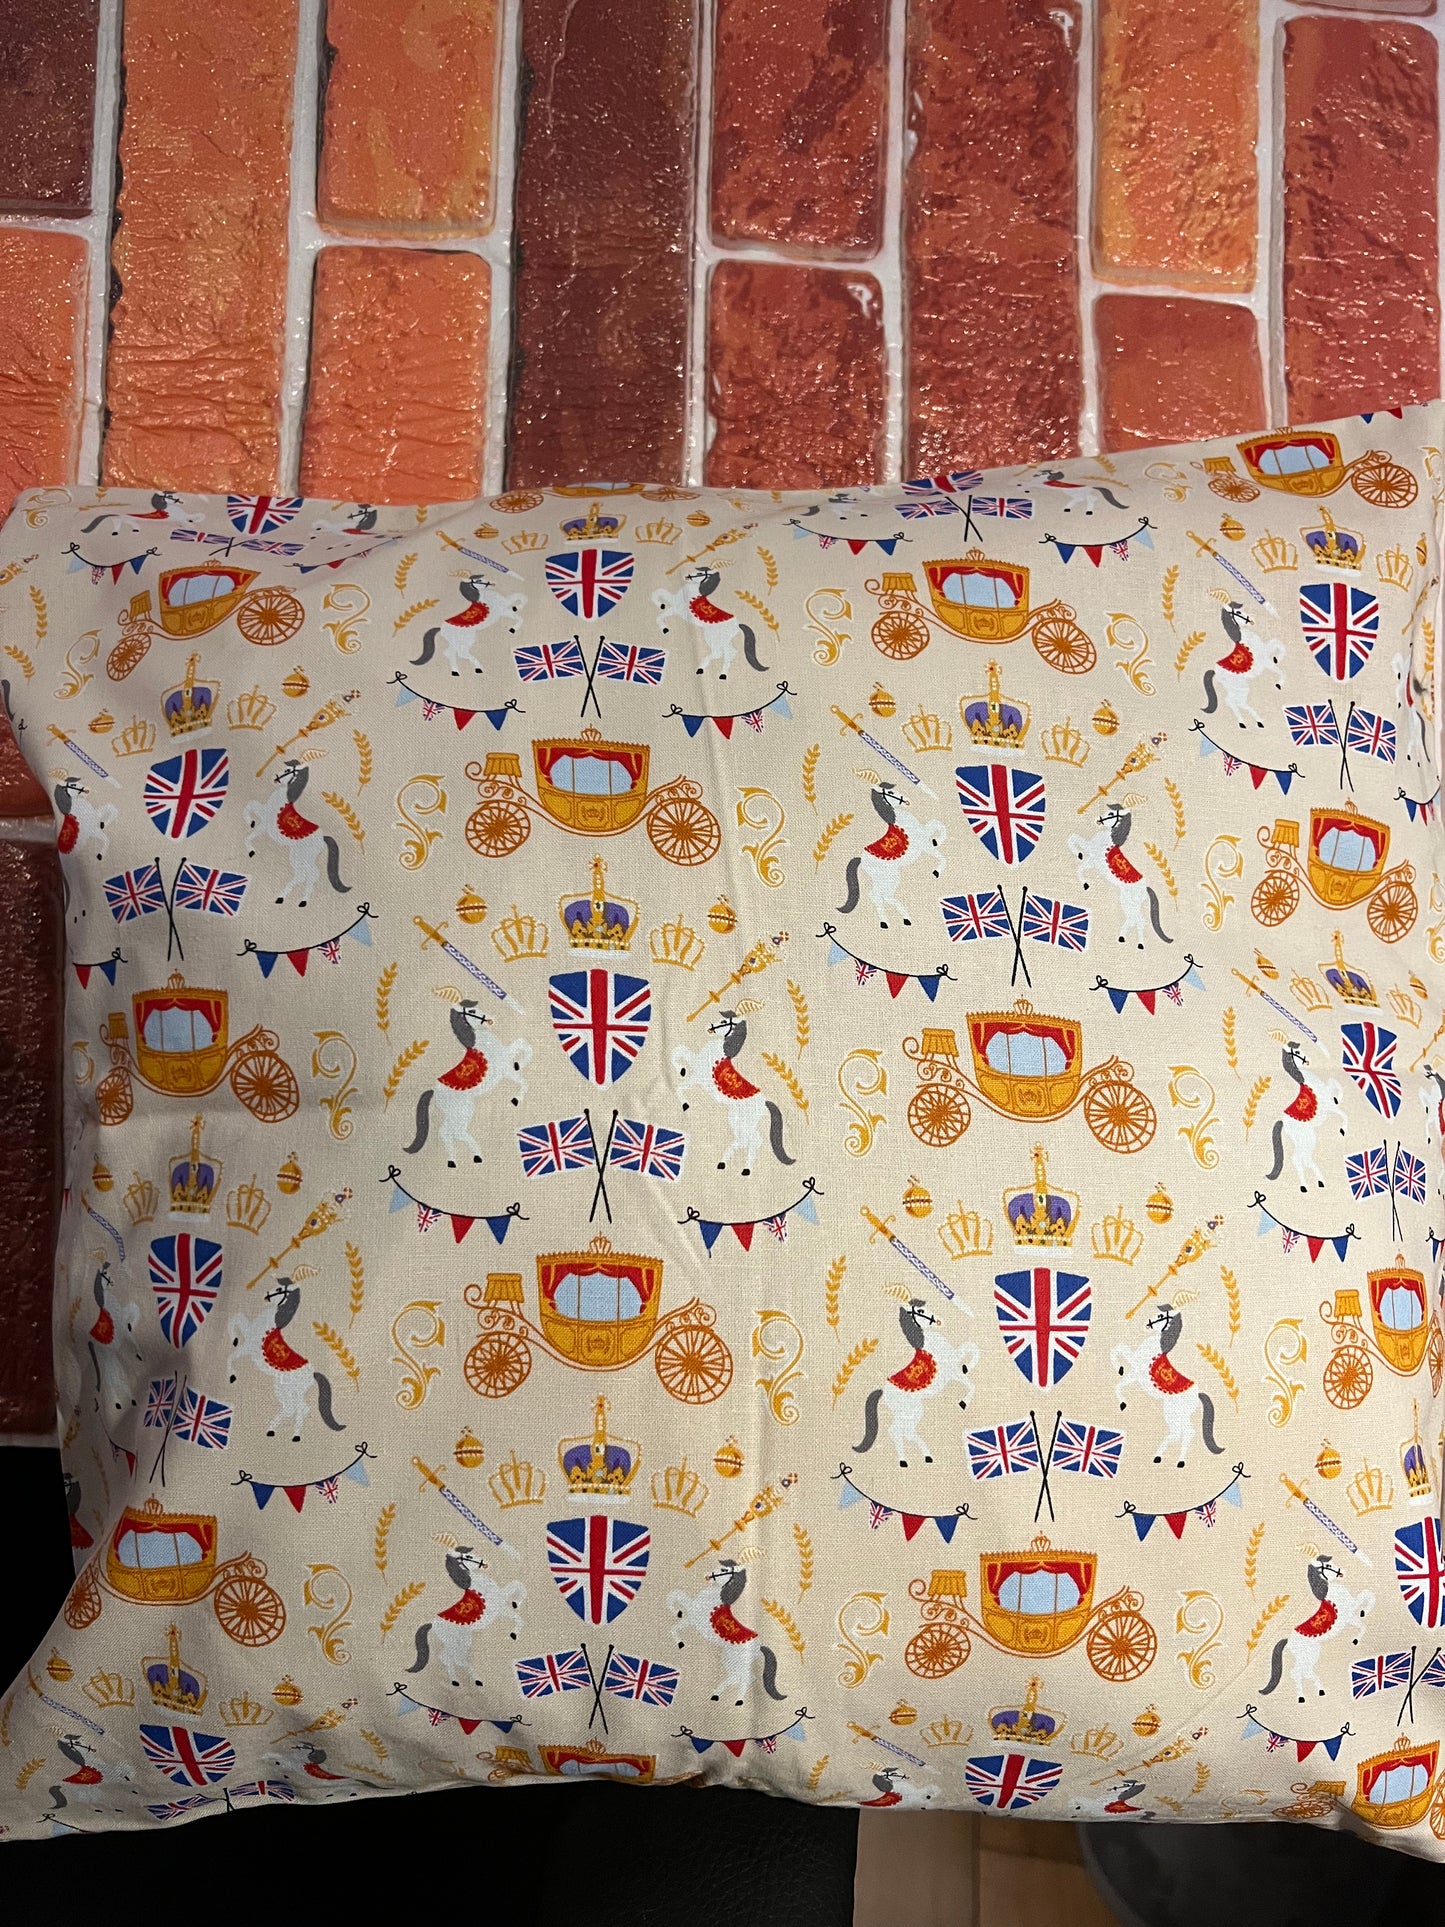 Coronation/Royal cushion covers